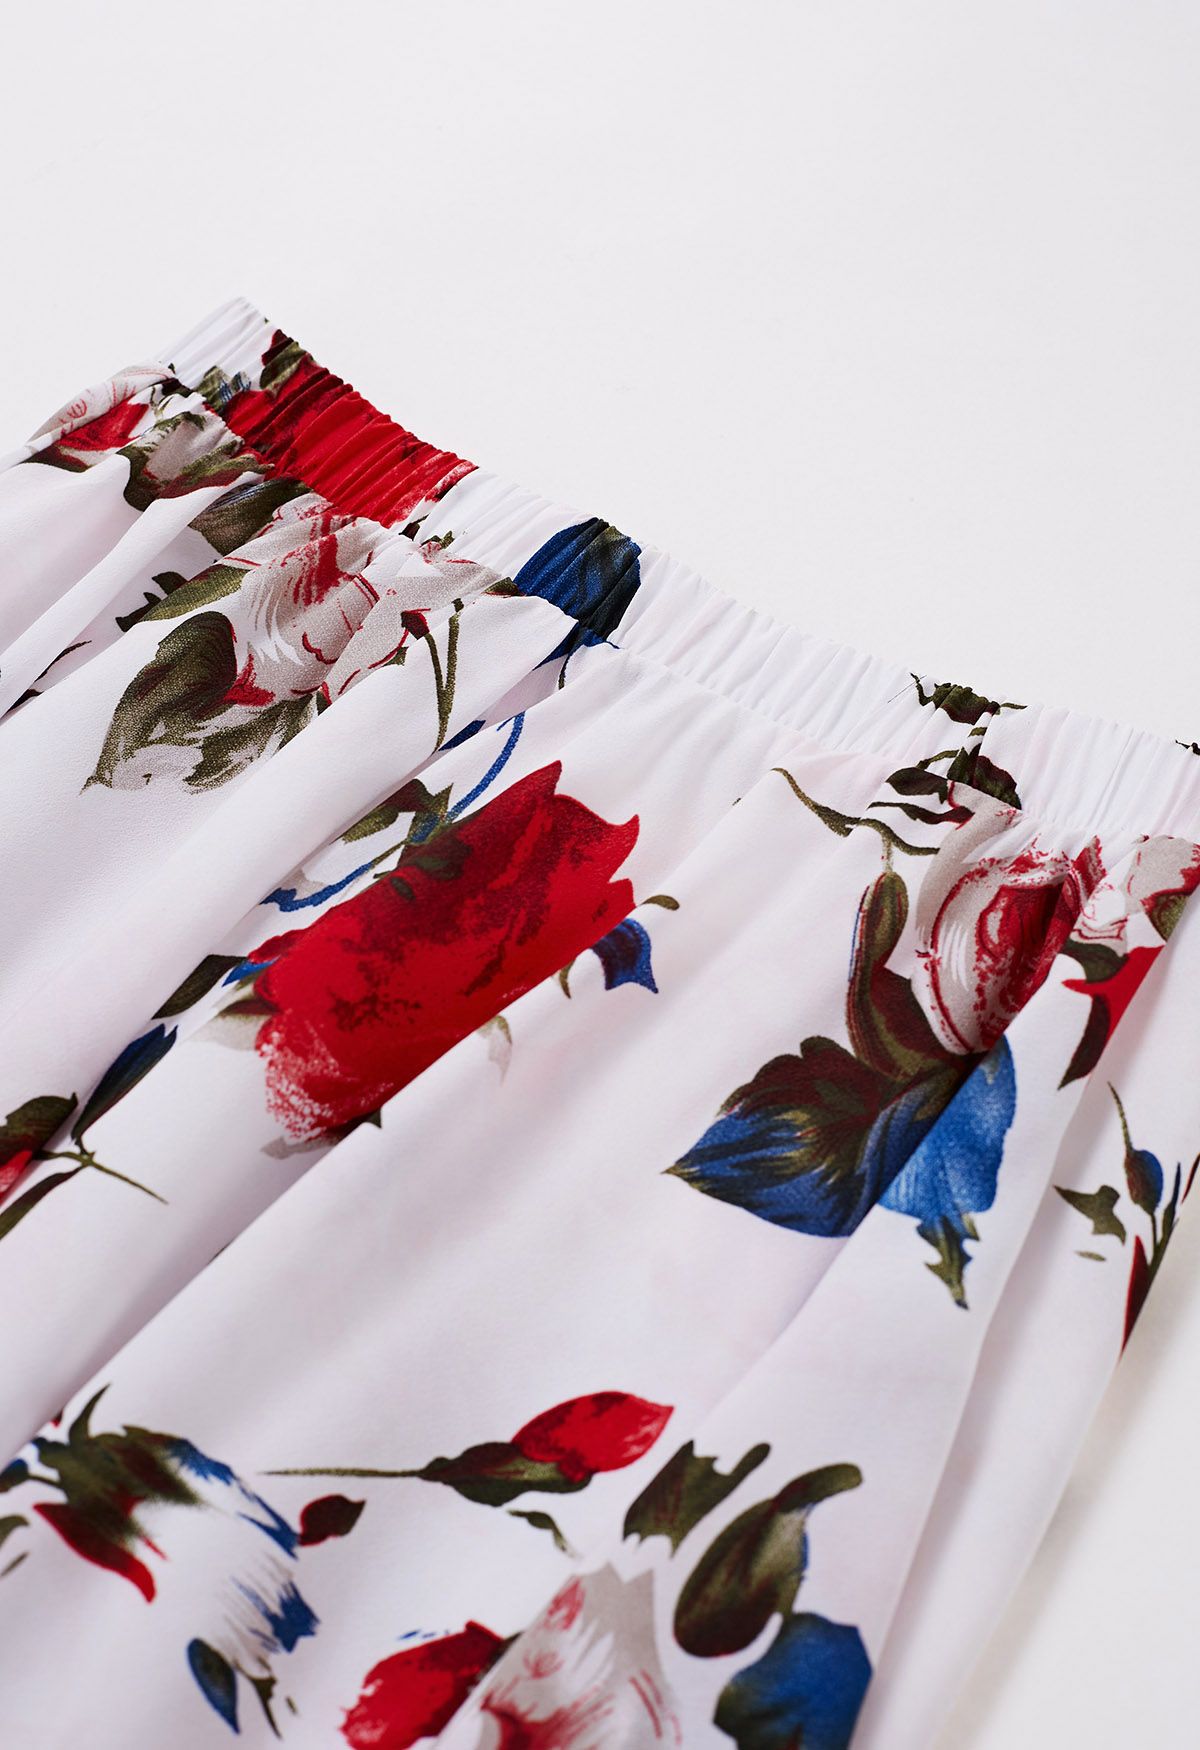 Enthralling Rose Printed Chiffon Maxi Skirt